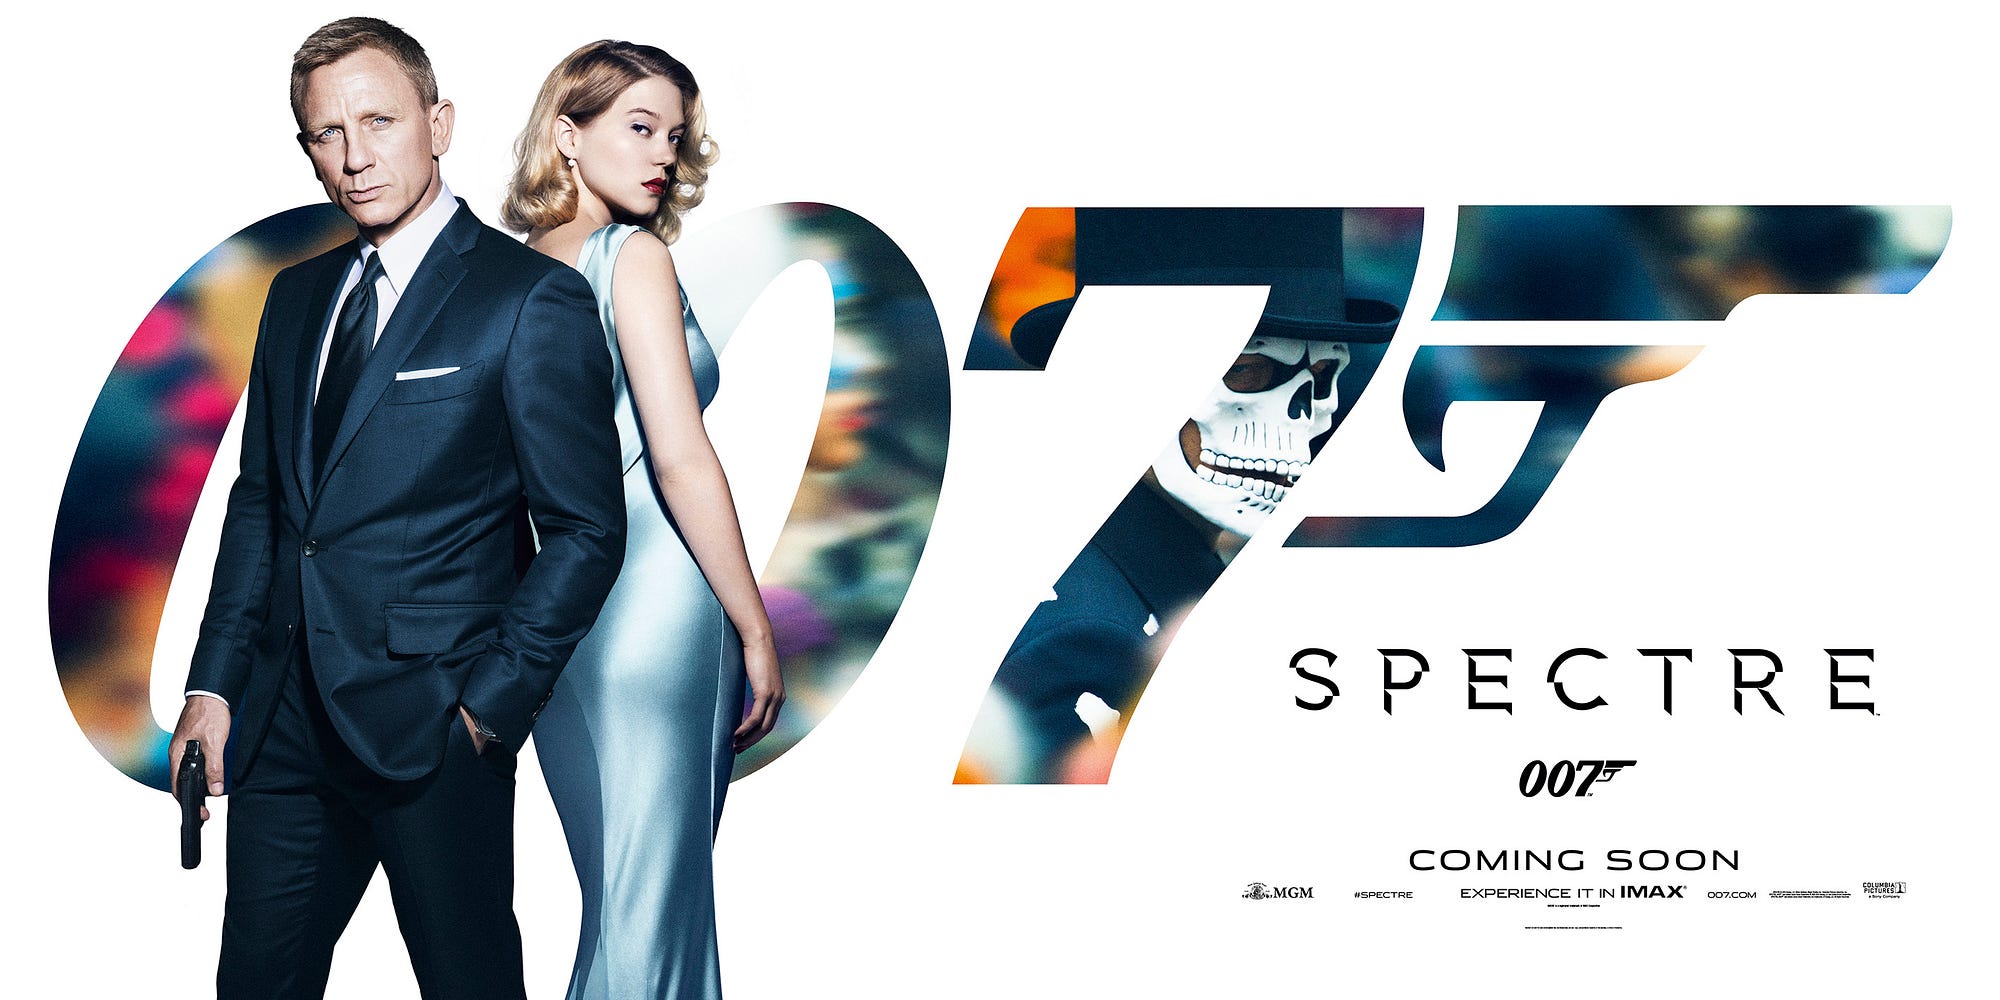 Spectre Bond Girl Spectre Lea Seydoux